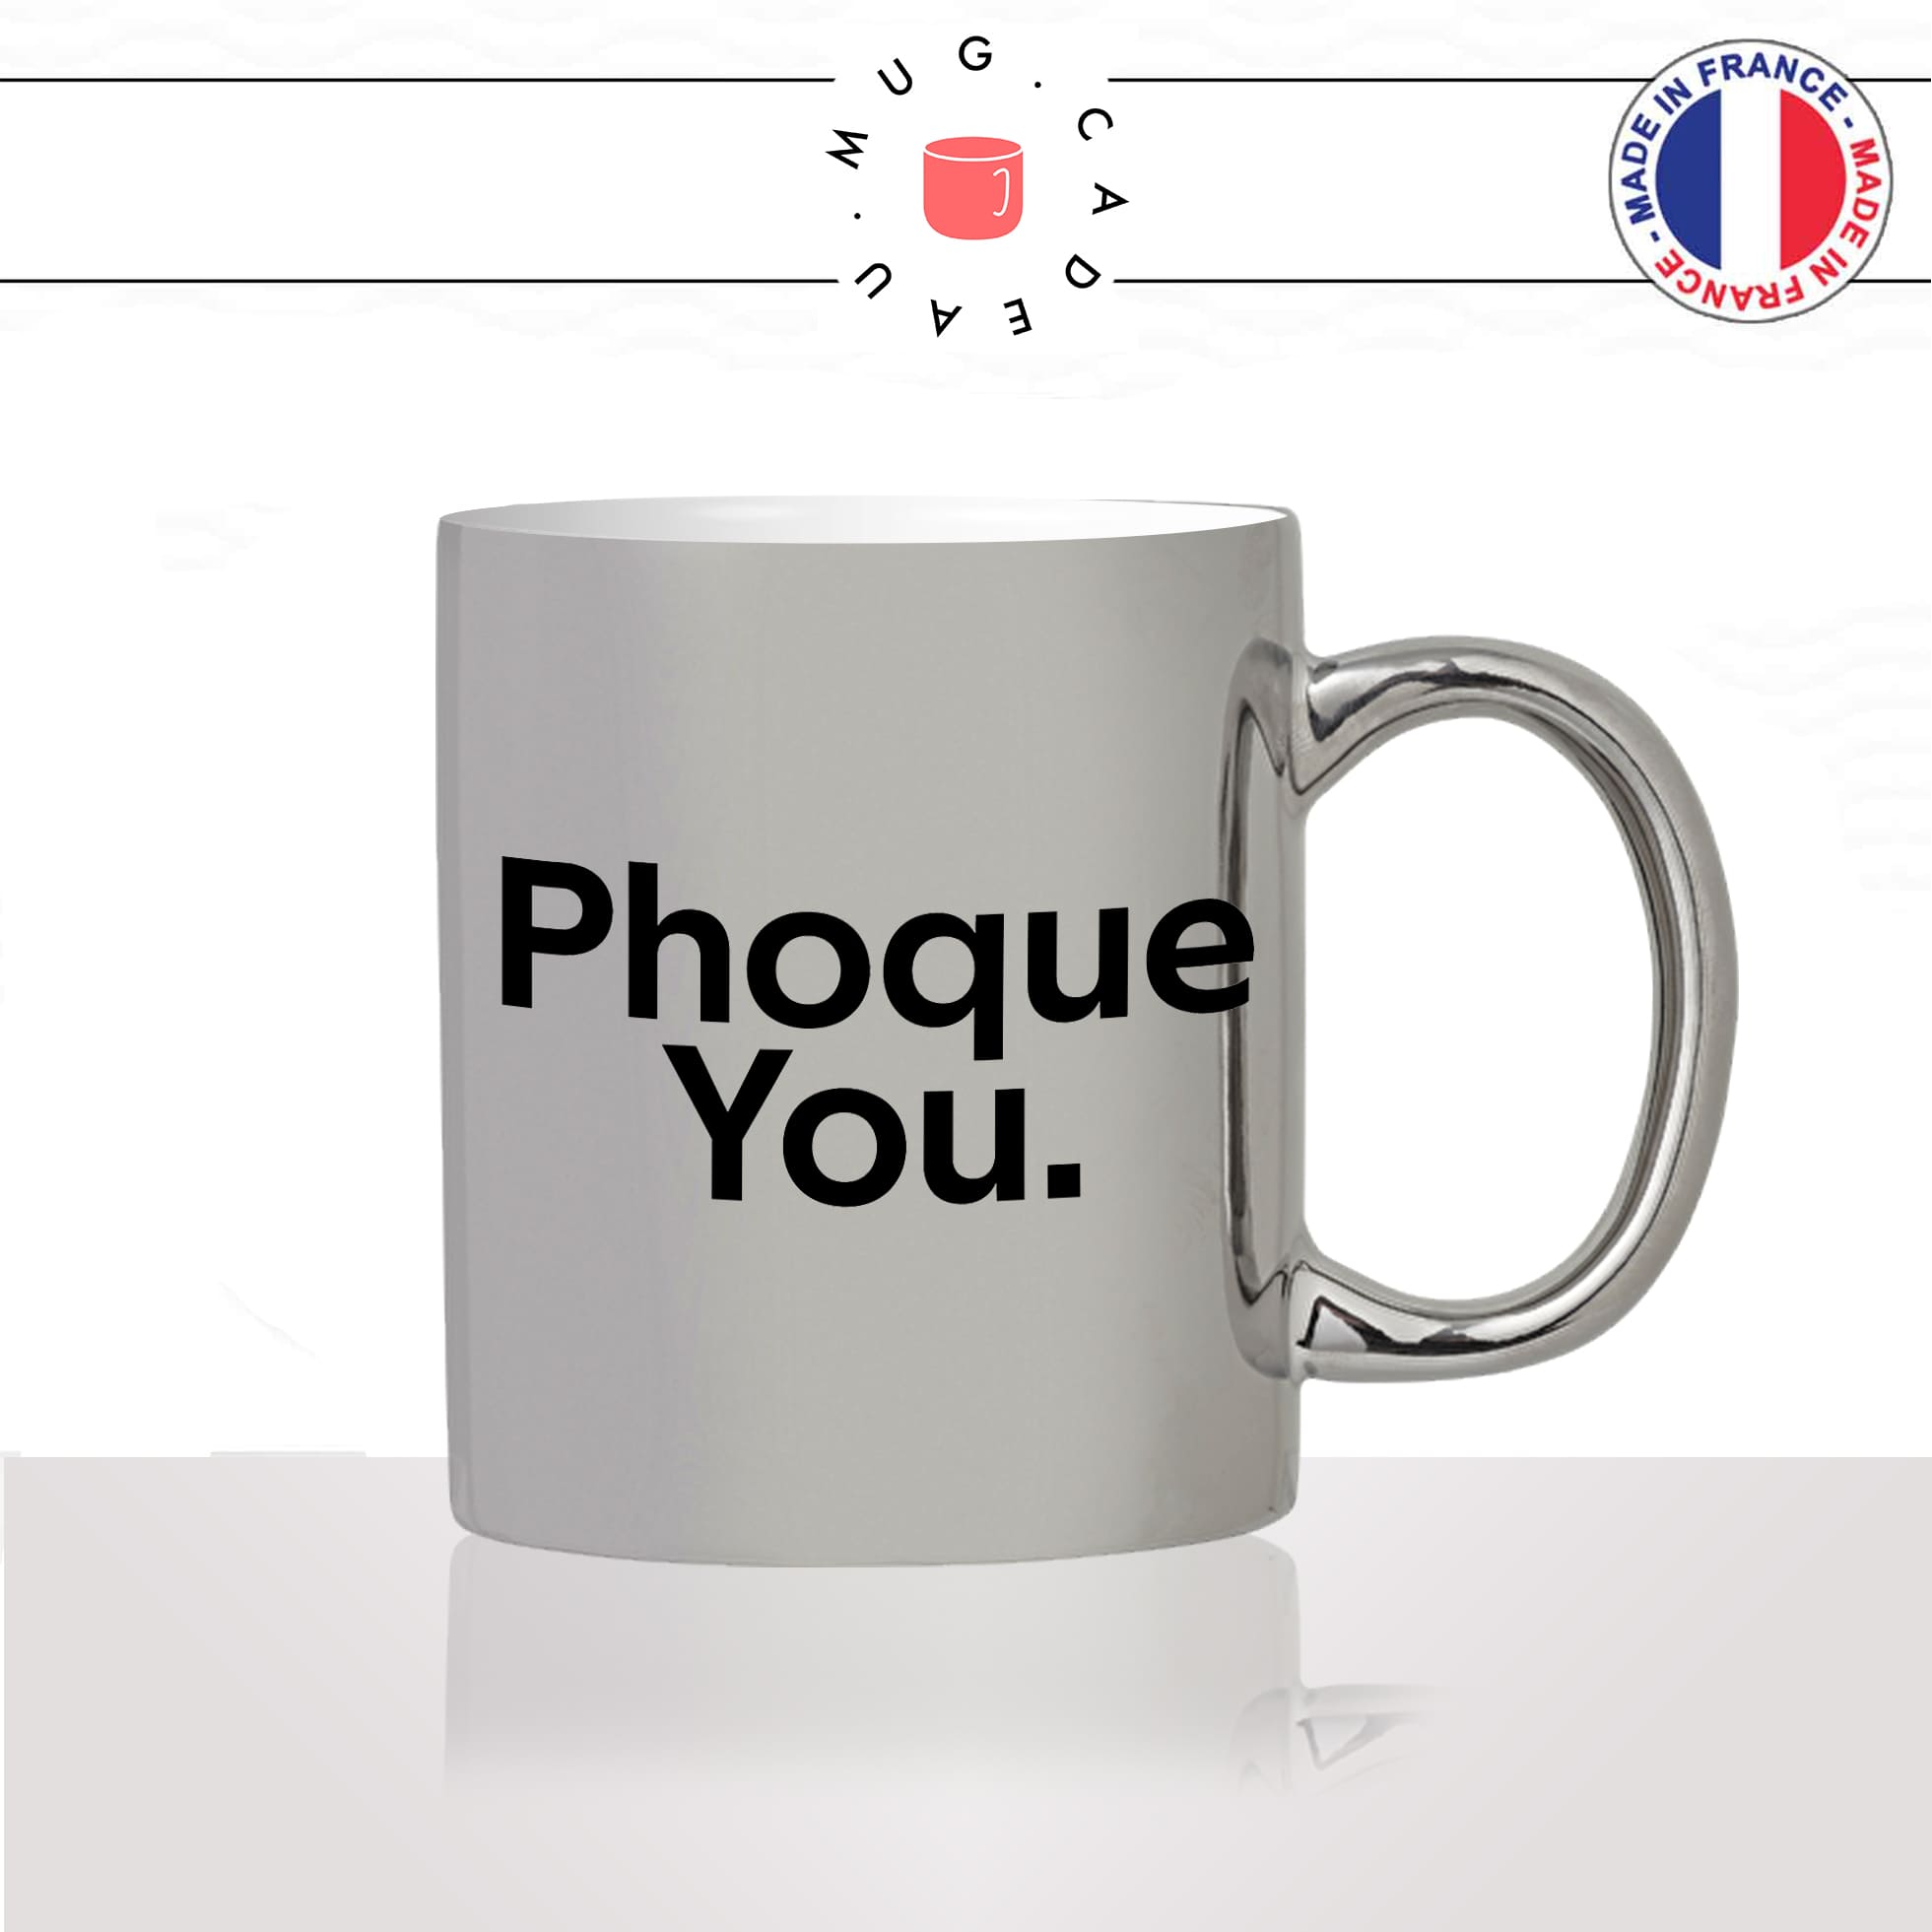 mug-tasse-argenté-argent-gris-silver-phoque-you-fuck-u-animal-drole-humour-fun-idée-cadeau-originale-cool2